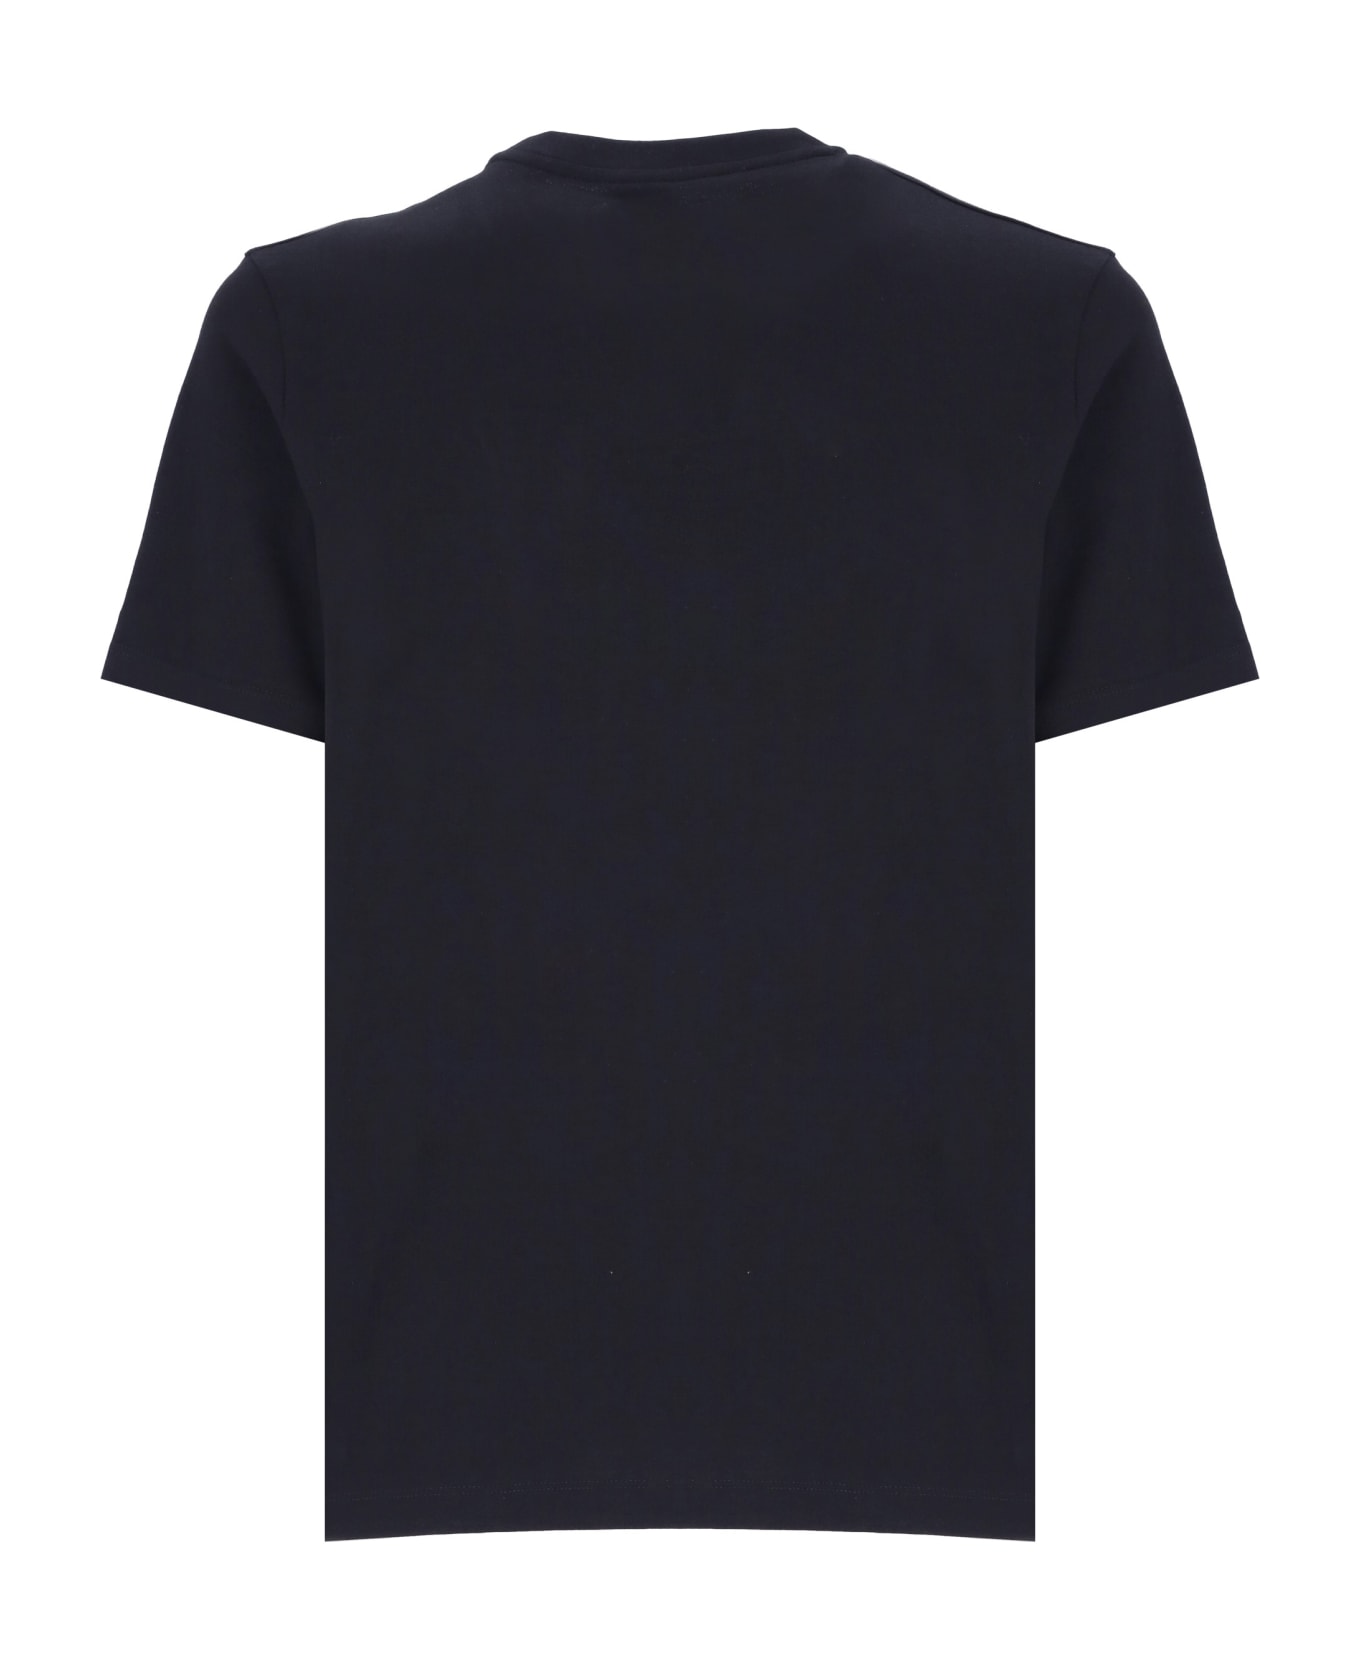 Hugo Boss Tiburt 354 T-shirt - Blue シャツ